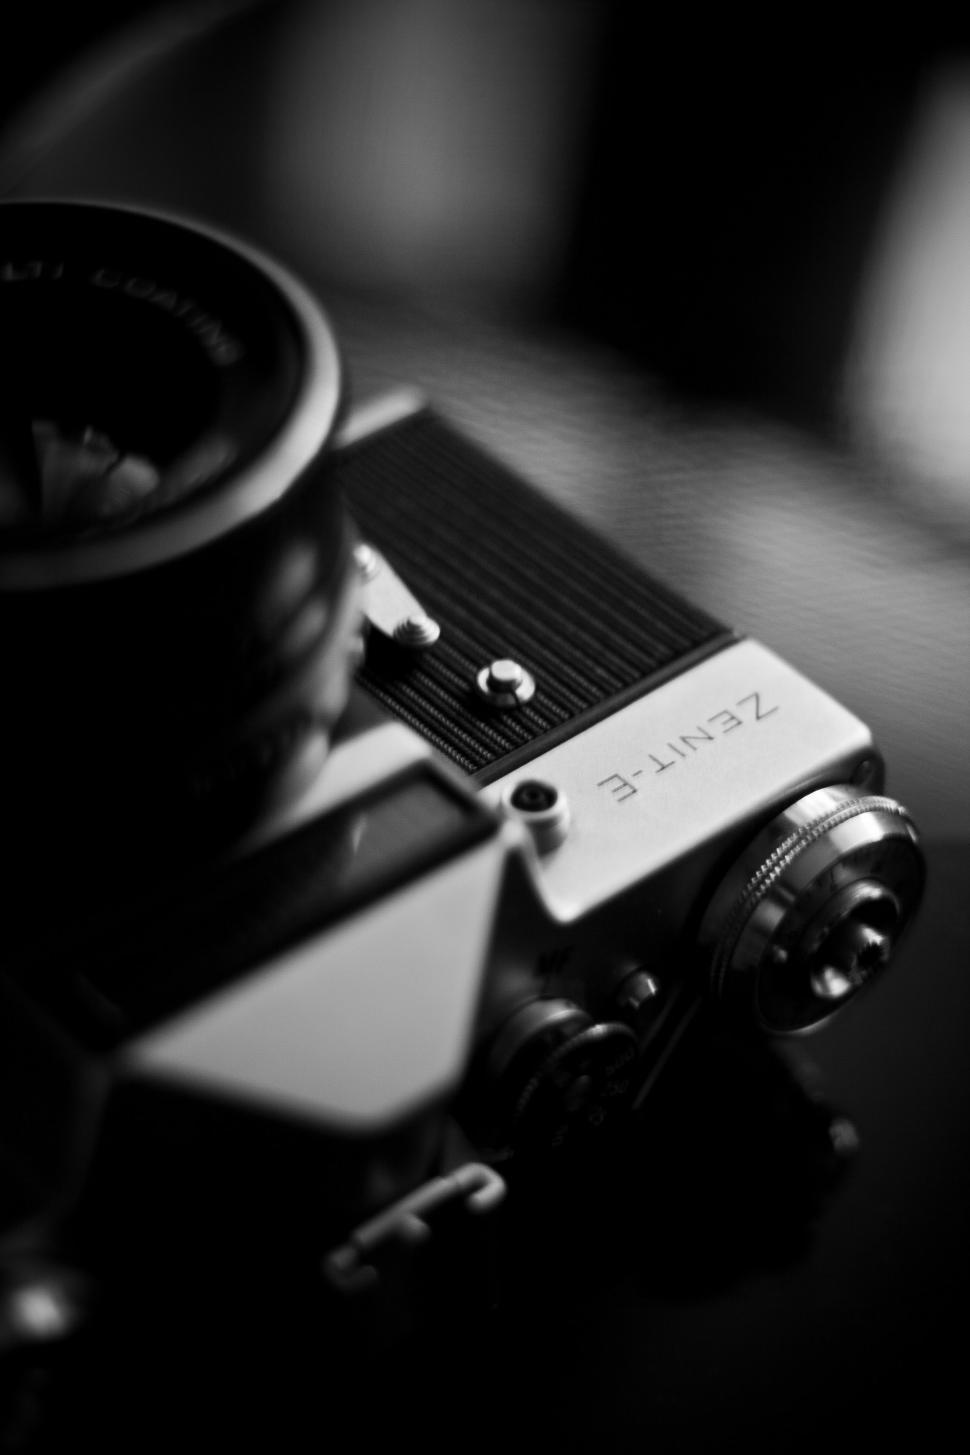 Free Image of Black and White Photo Camera 